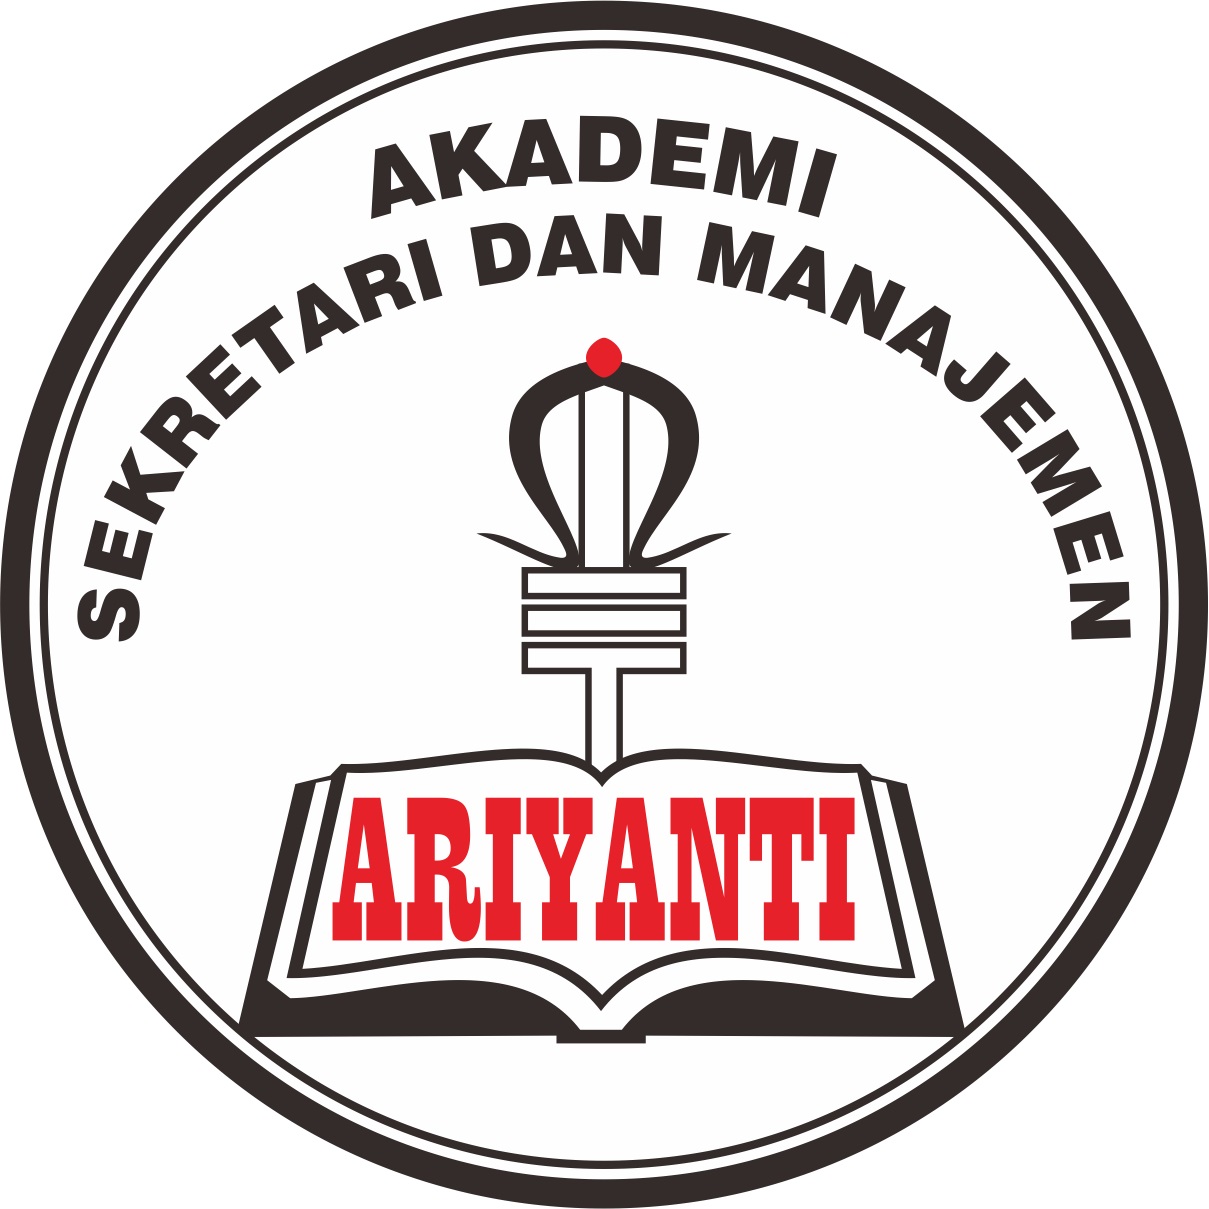 logo Akademi Sekretari Dan Manajemen Ariyanti